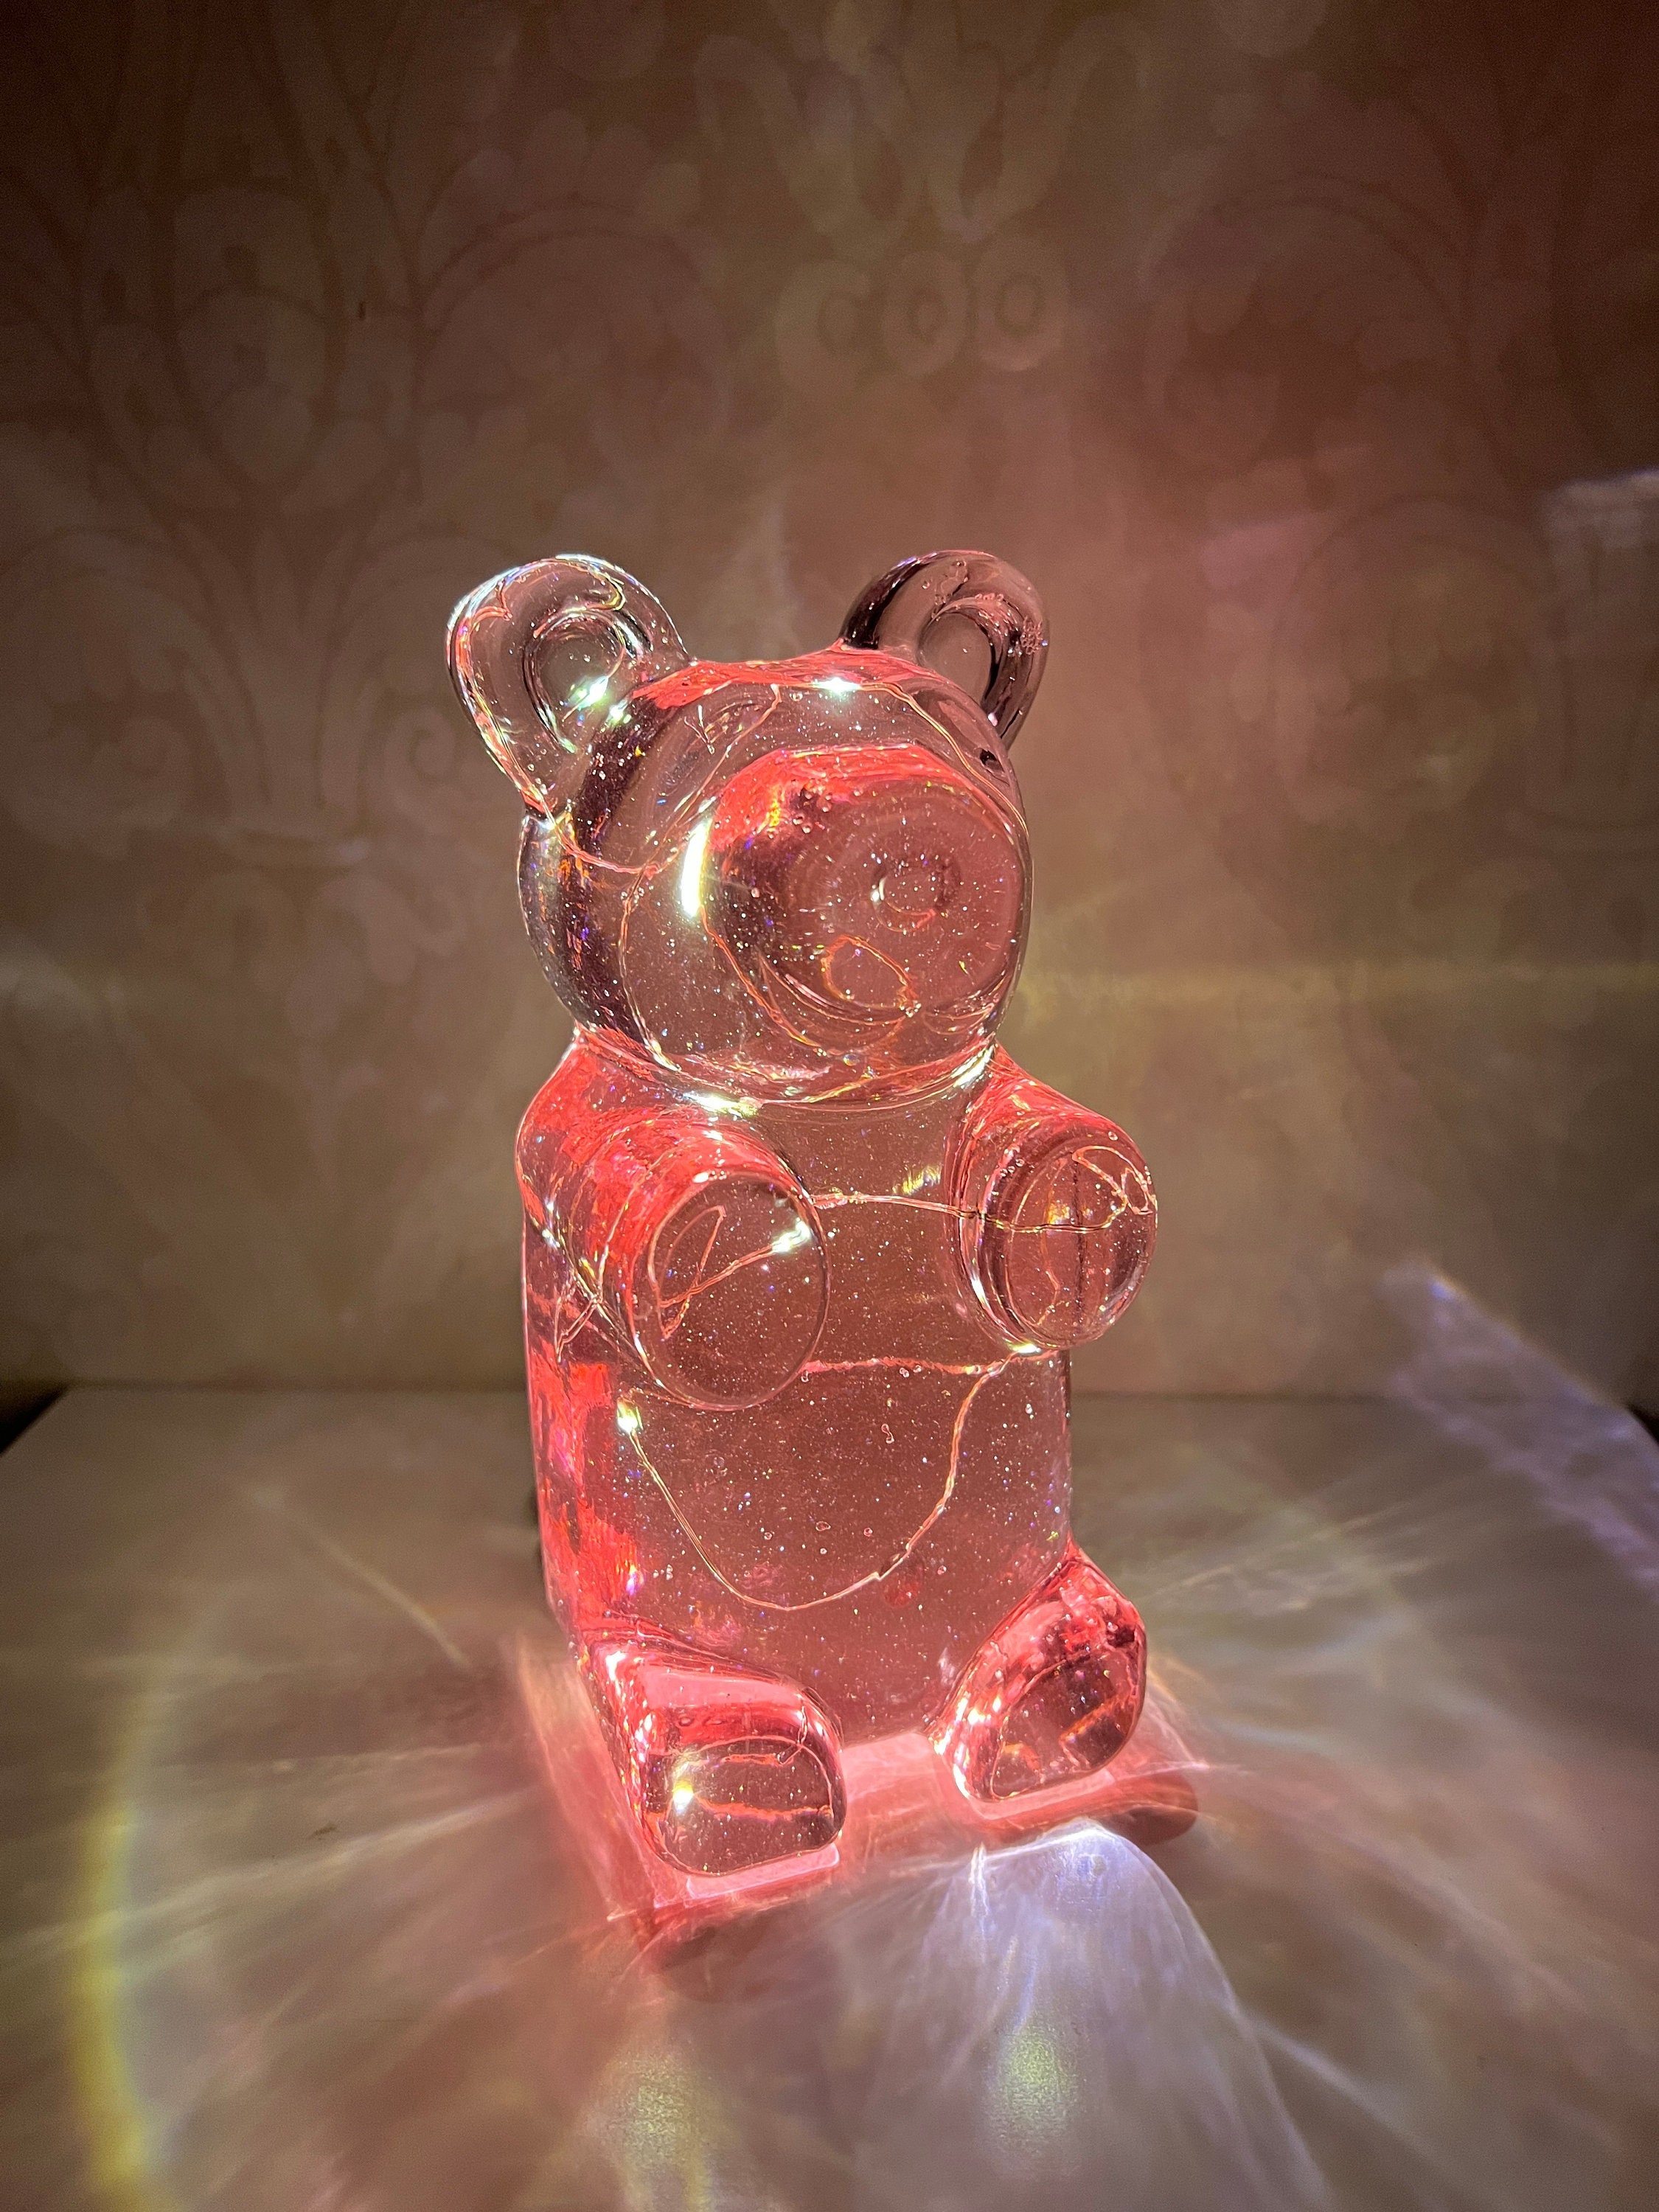 OMG Pop Fidgety - Jumbo XXL Gummy Yummy Bear (Multi Rainbow) – The Toy Maven